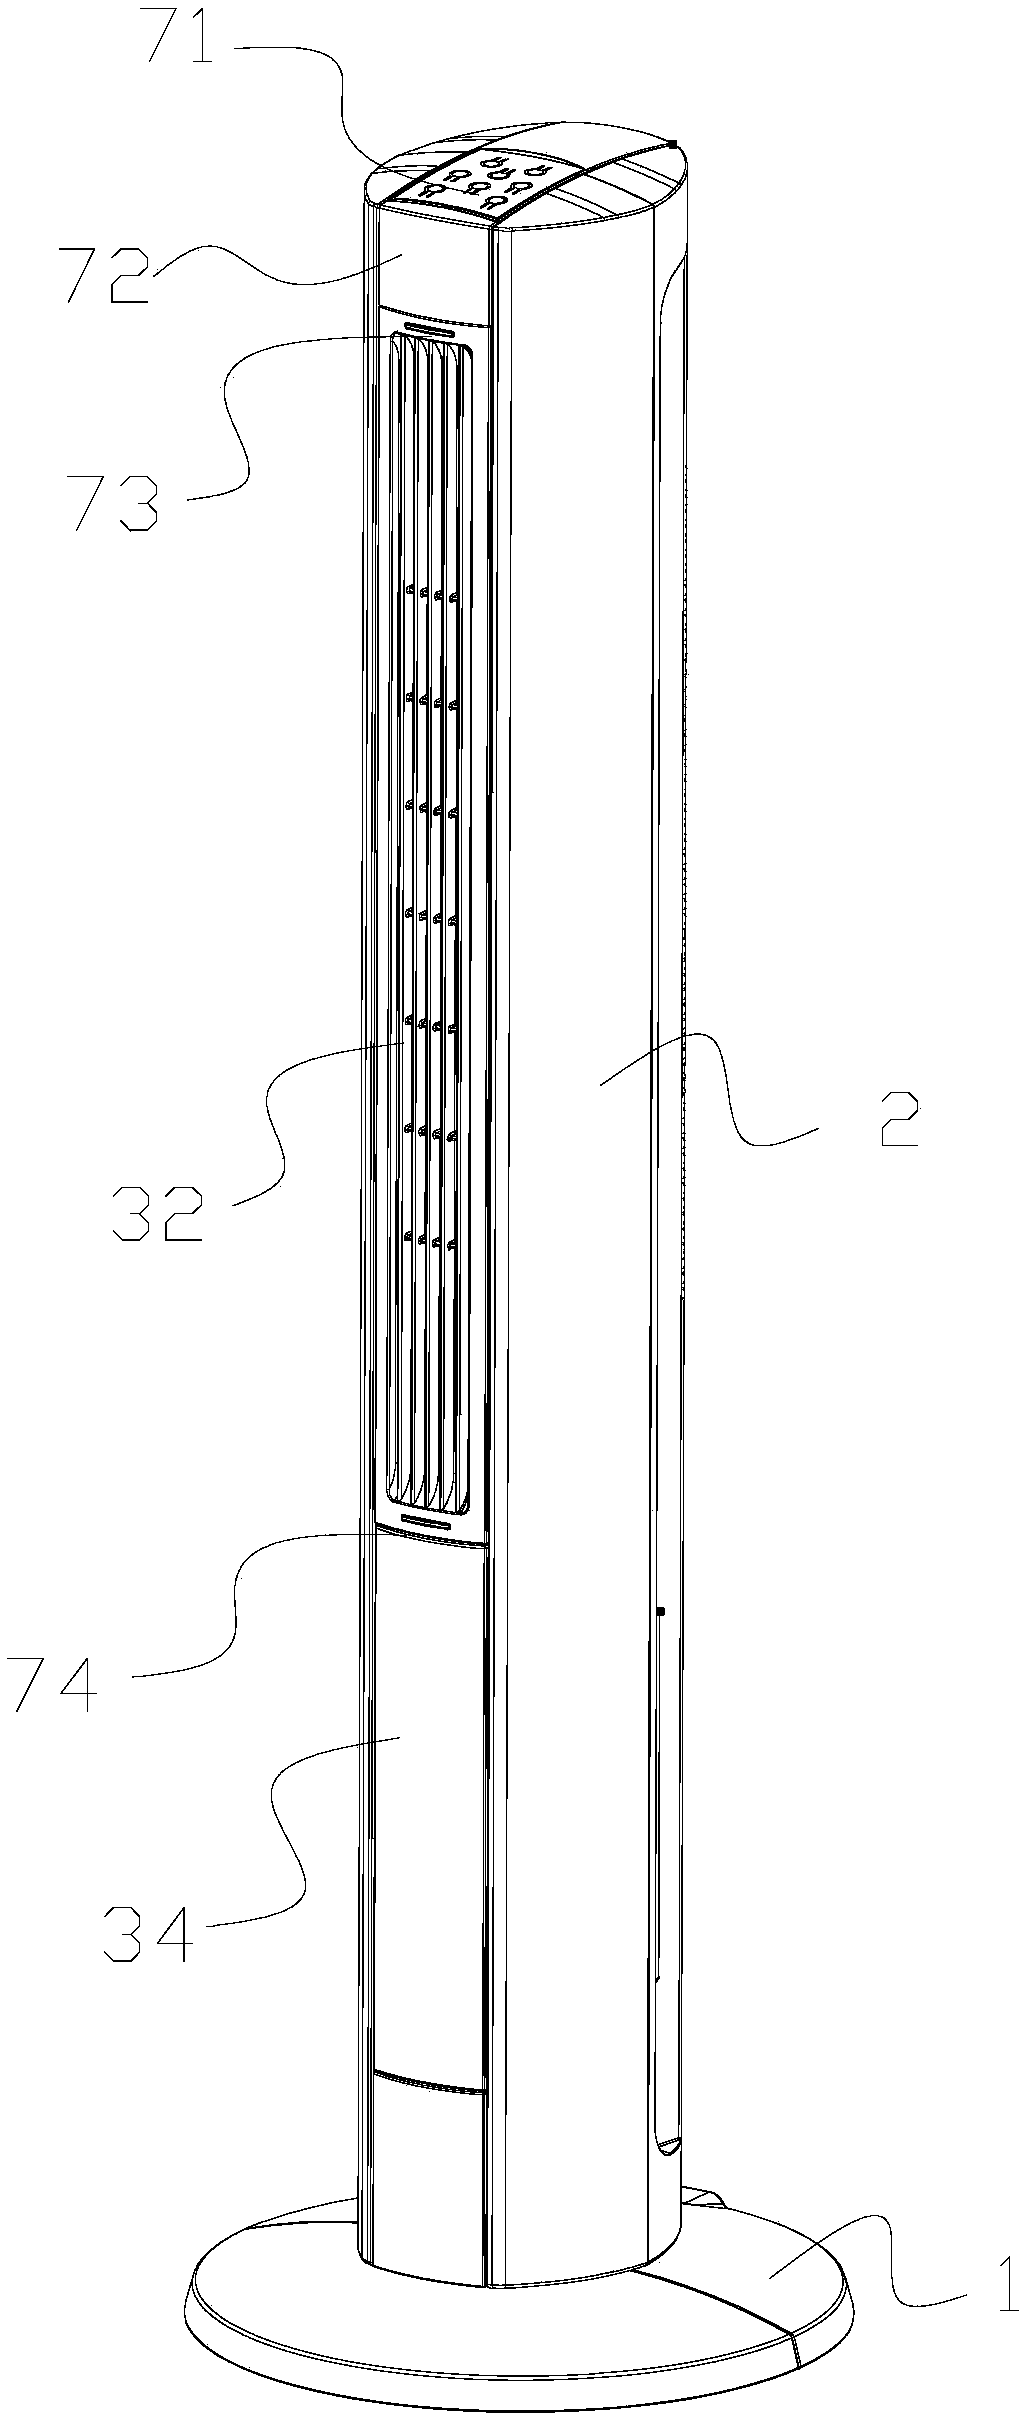 Cooling-heating dual-purpose tower fan